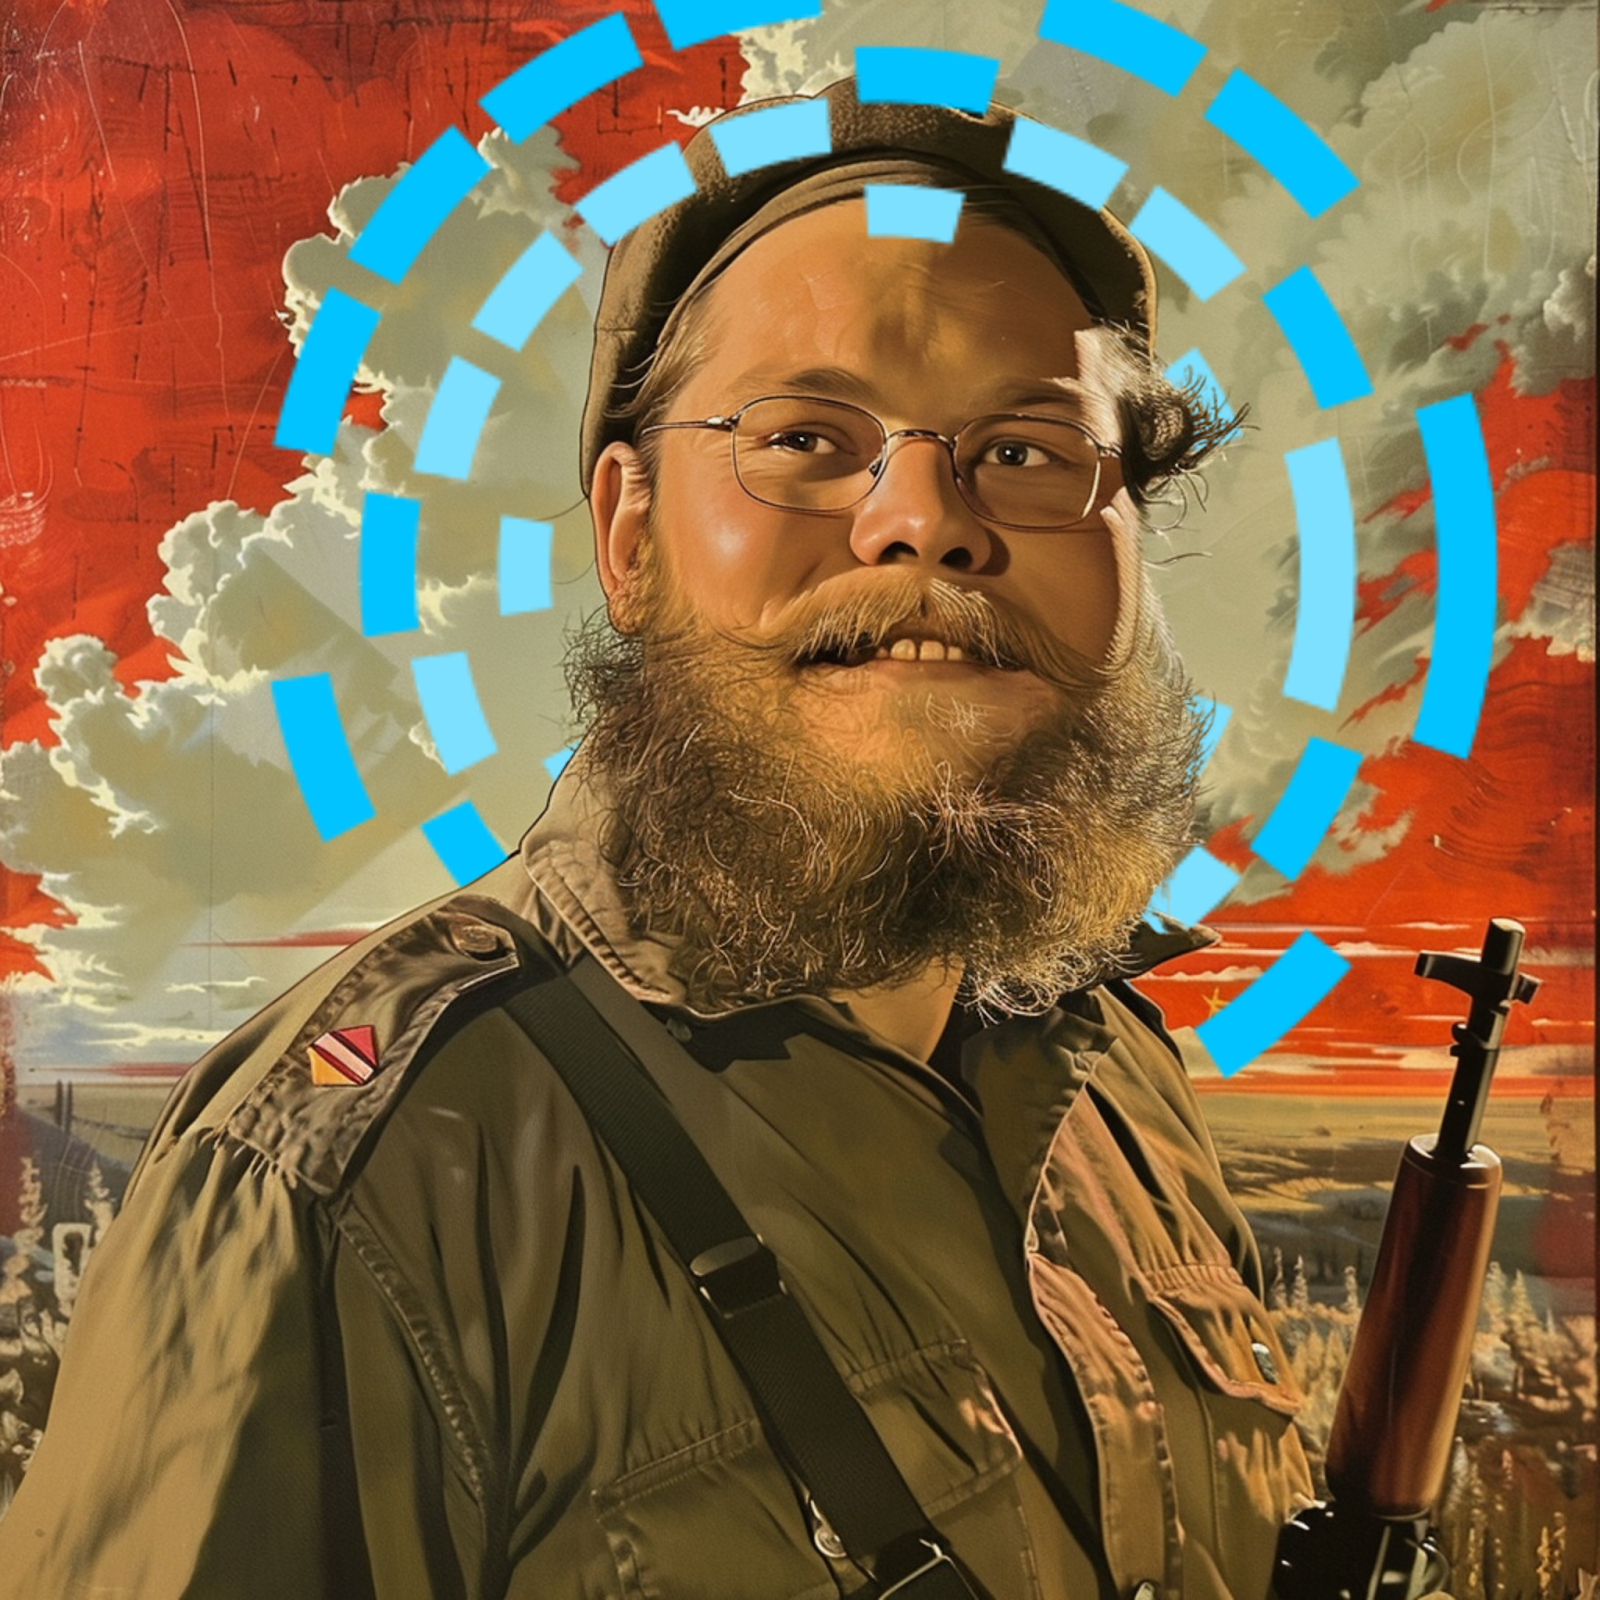 Soldier with art design background